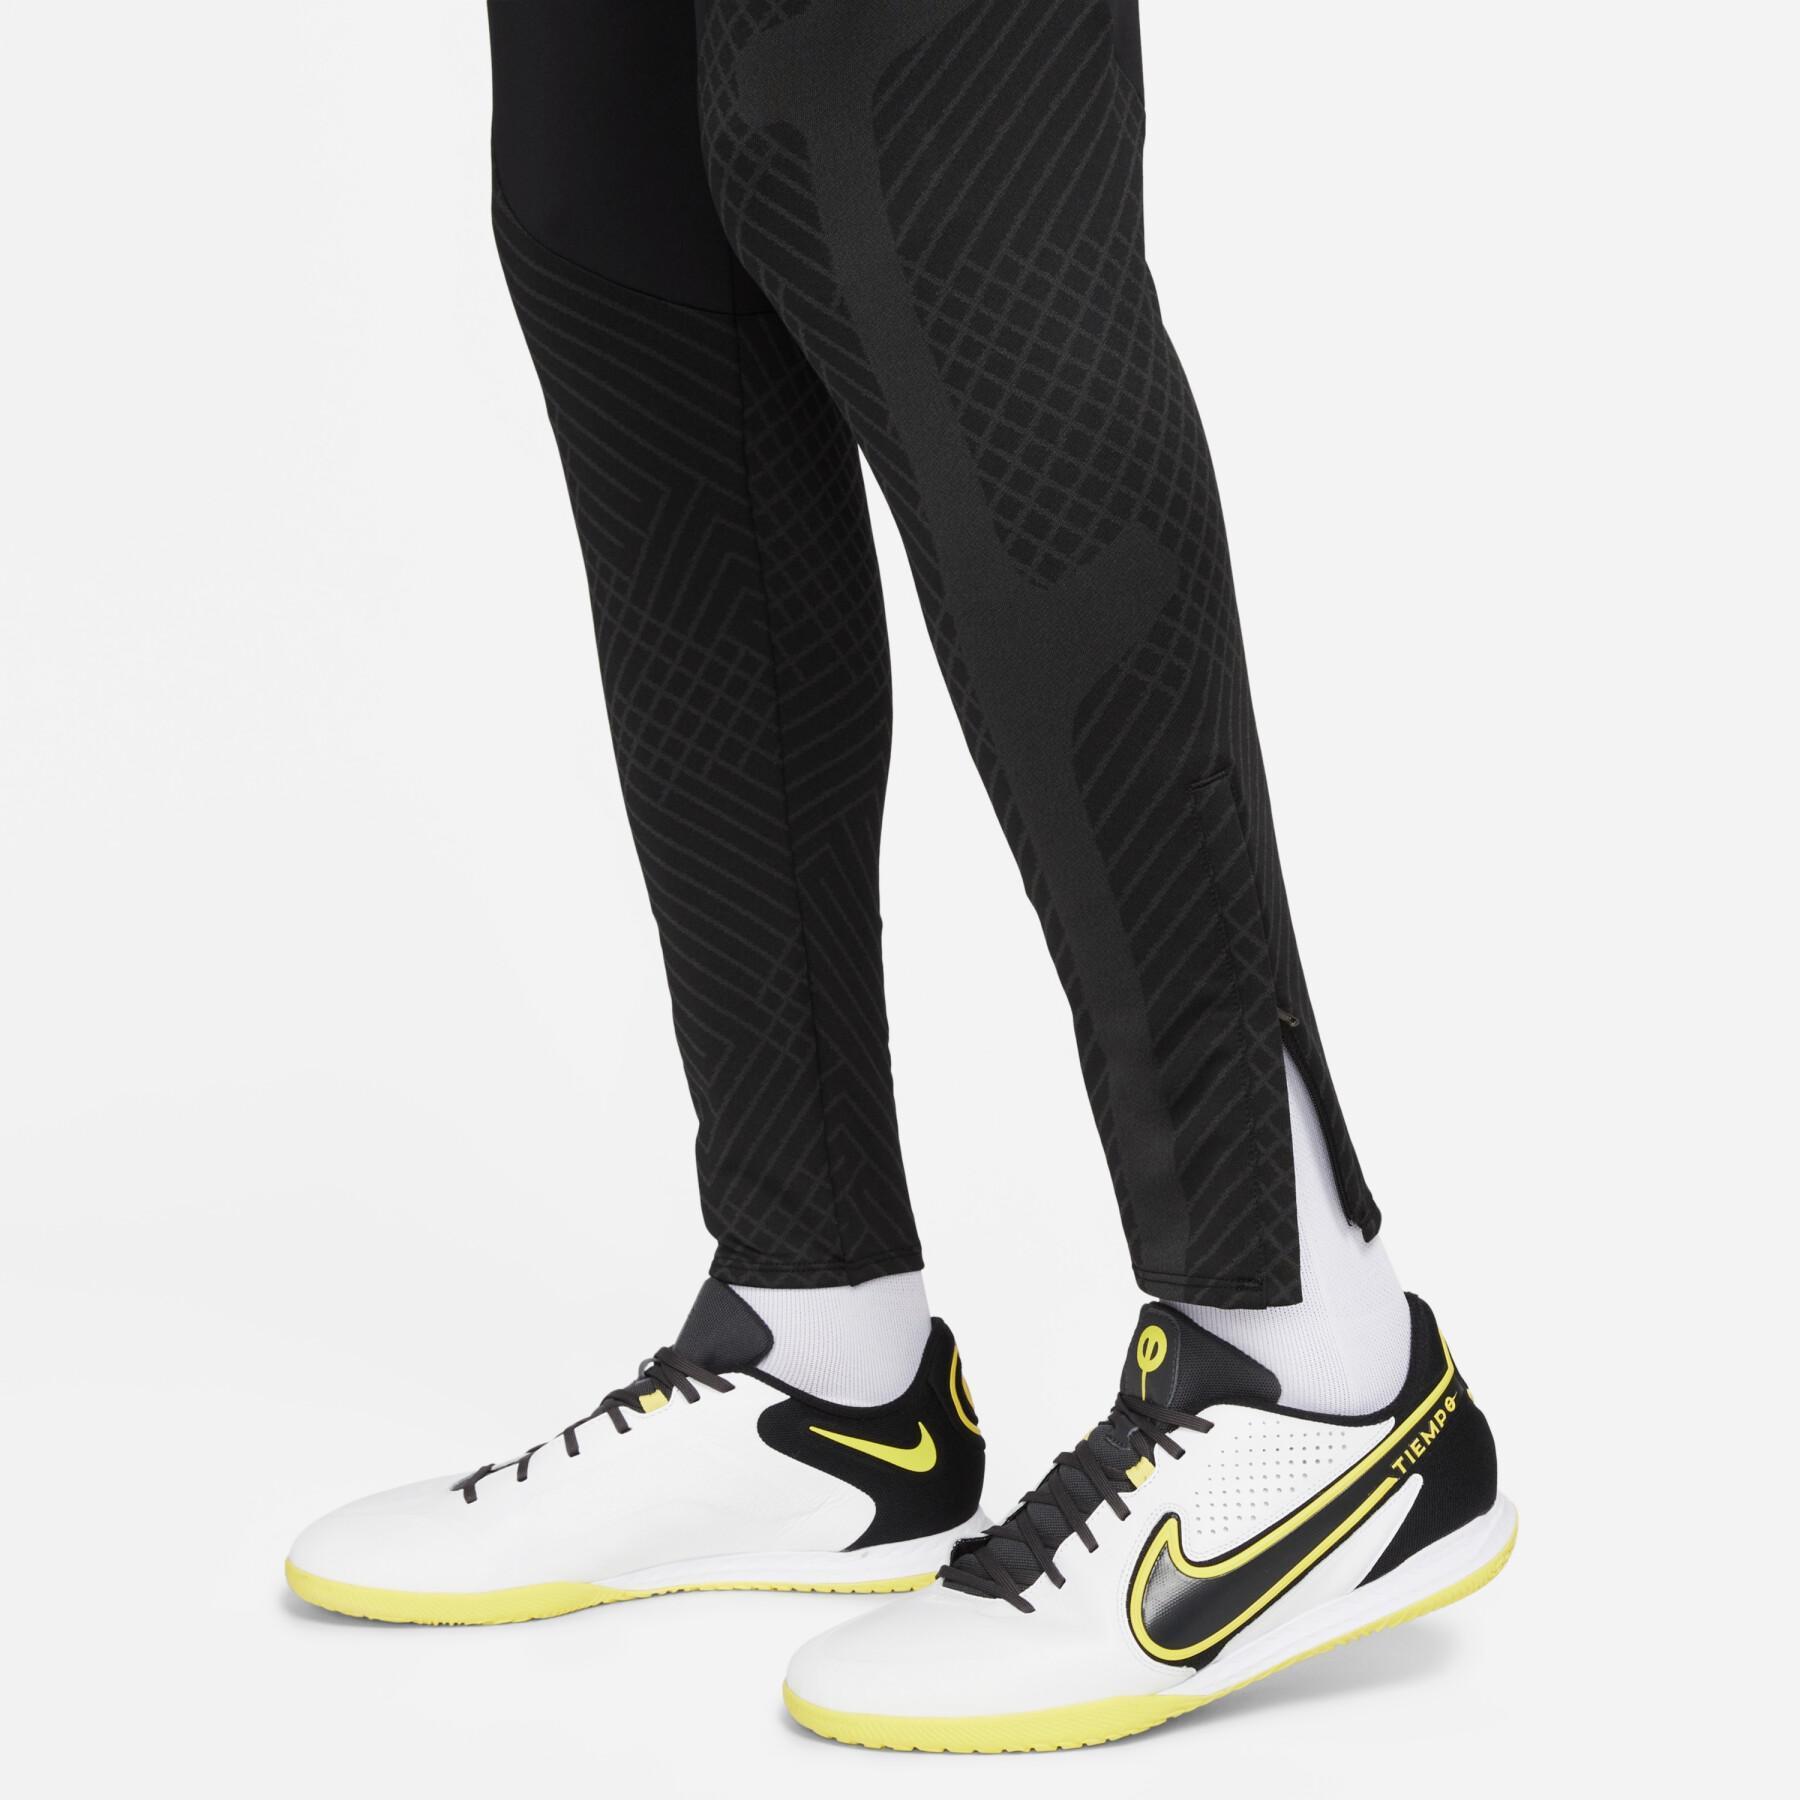 Spodnie Nike Dri-Fit Strike